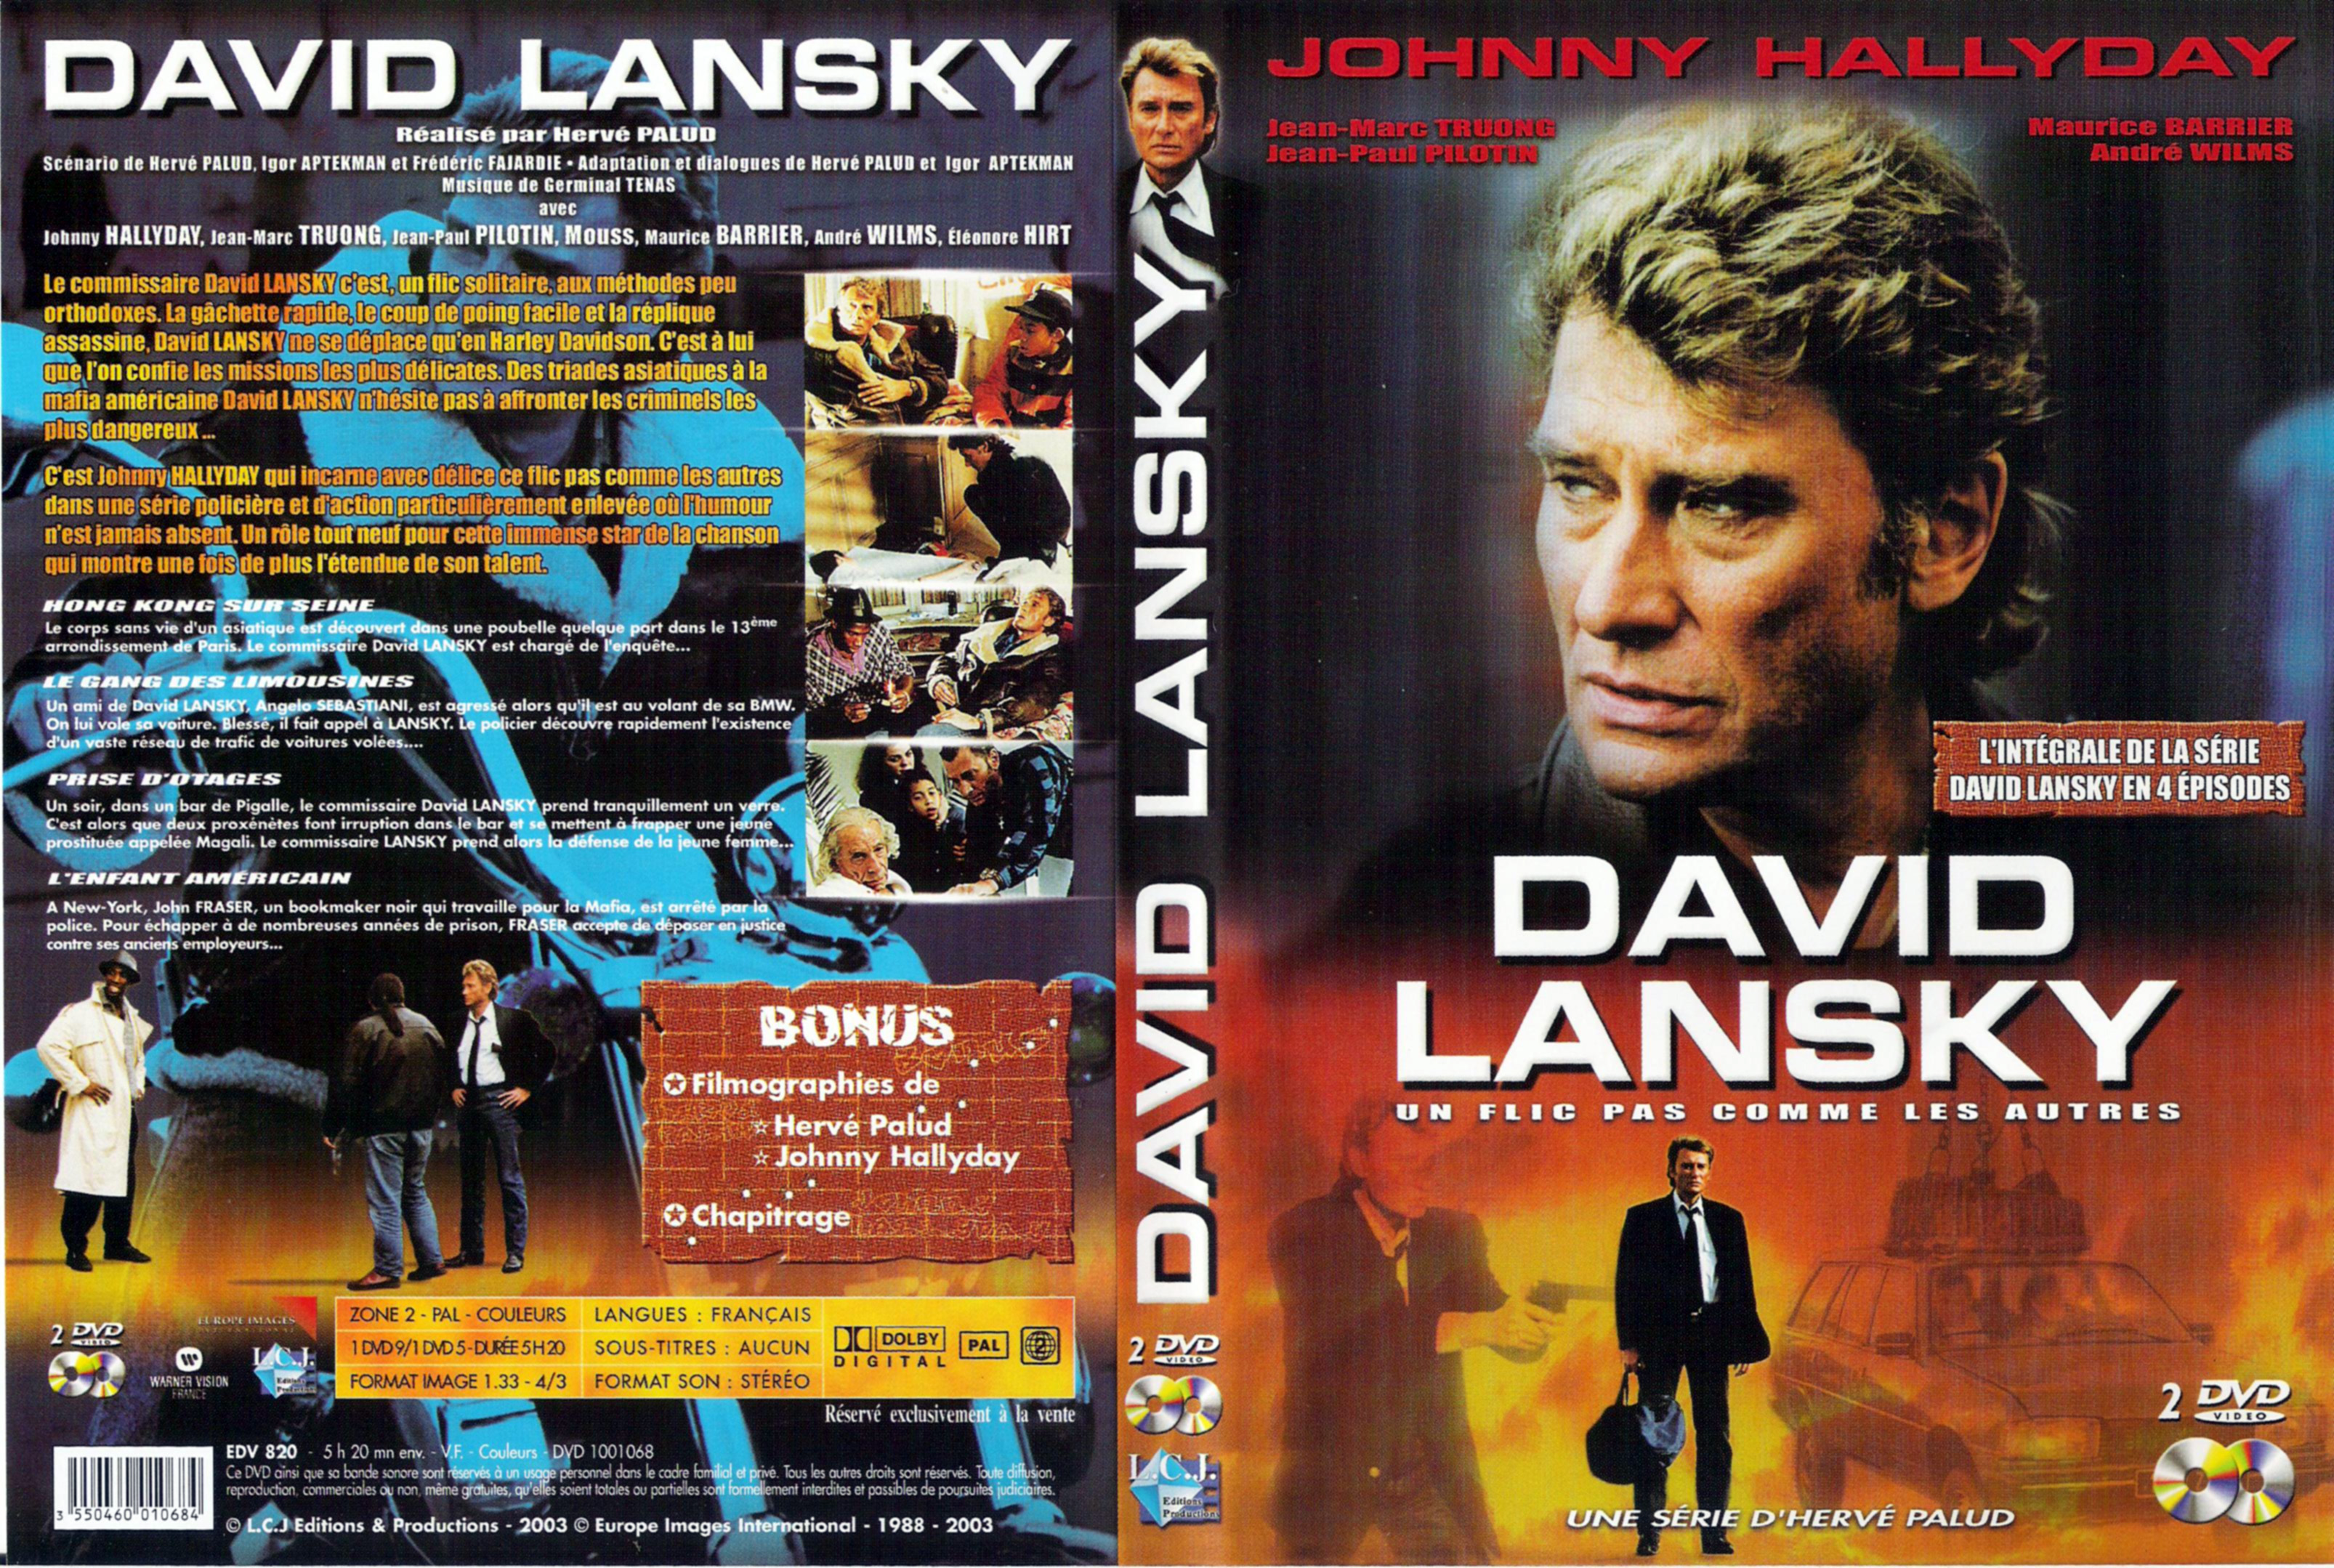 Jaquette DVD David Lansky